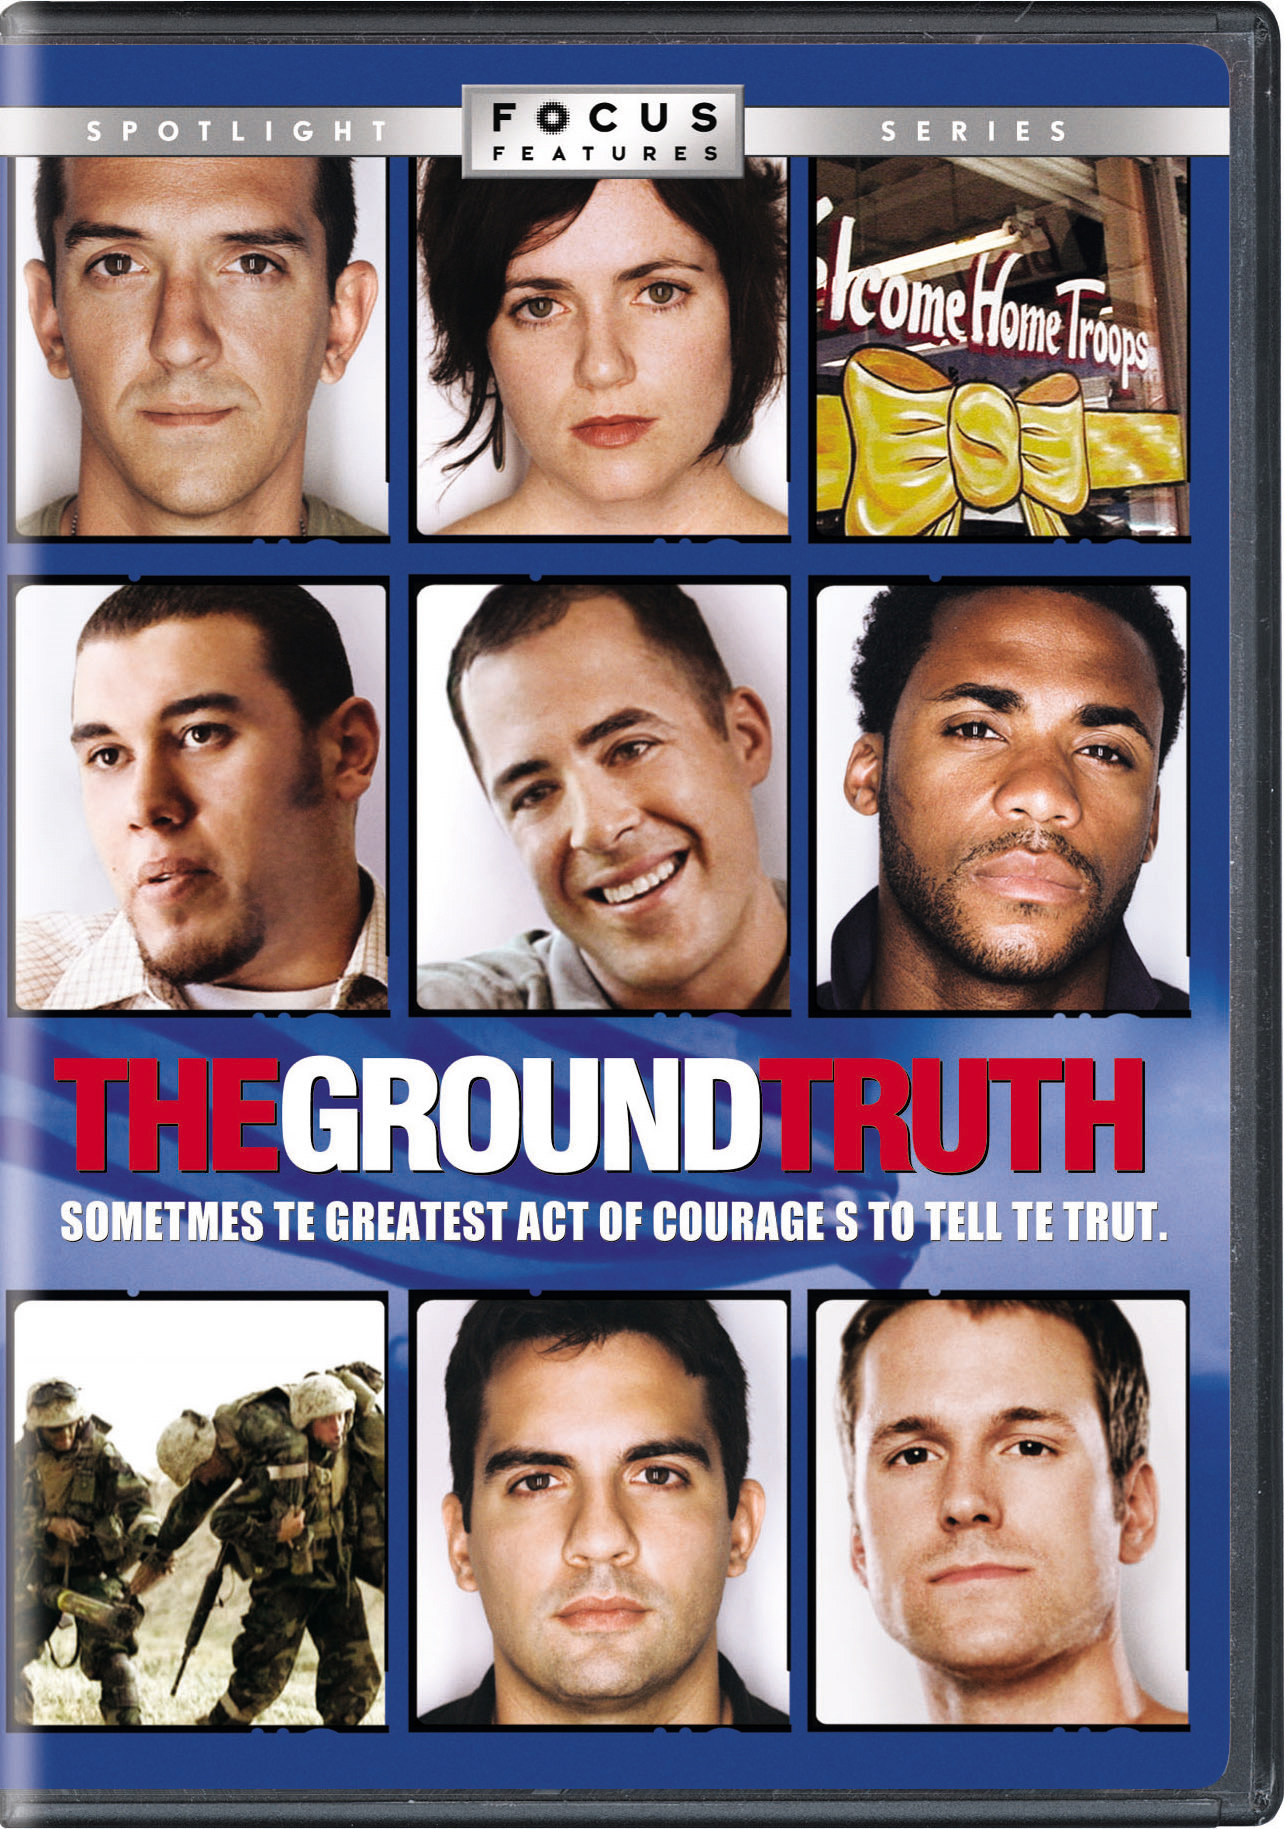 The Ground Truth (DVD Spotlight Series) - DVD [ 2006 ]  - Documentaries On DVD